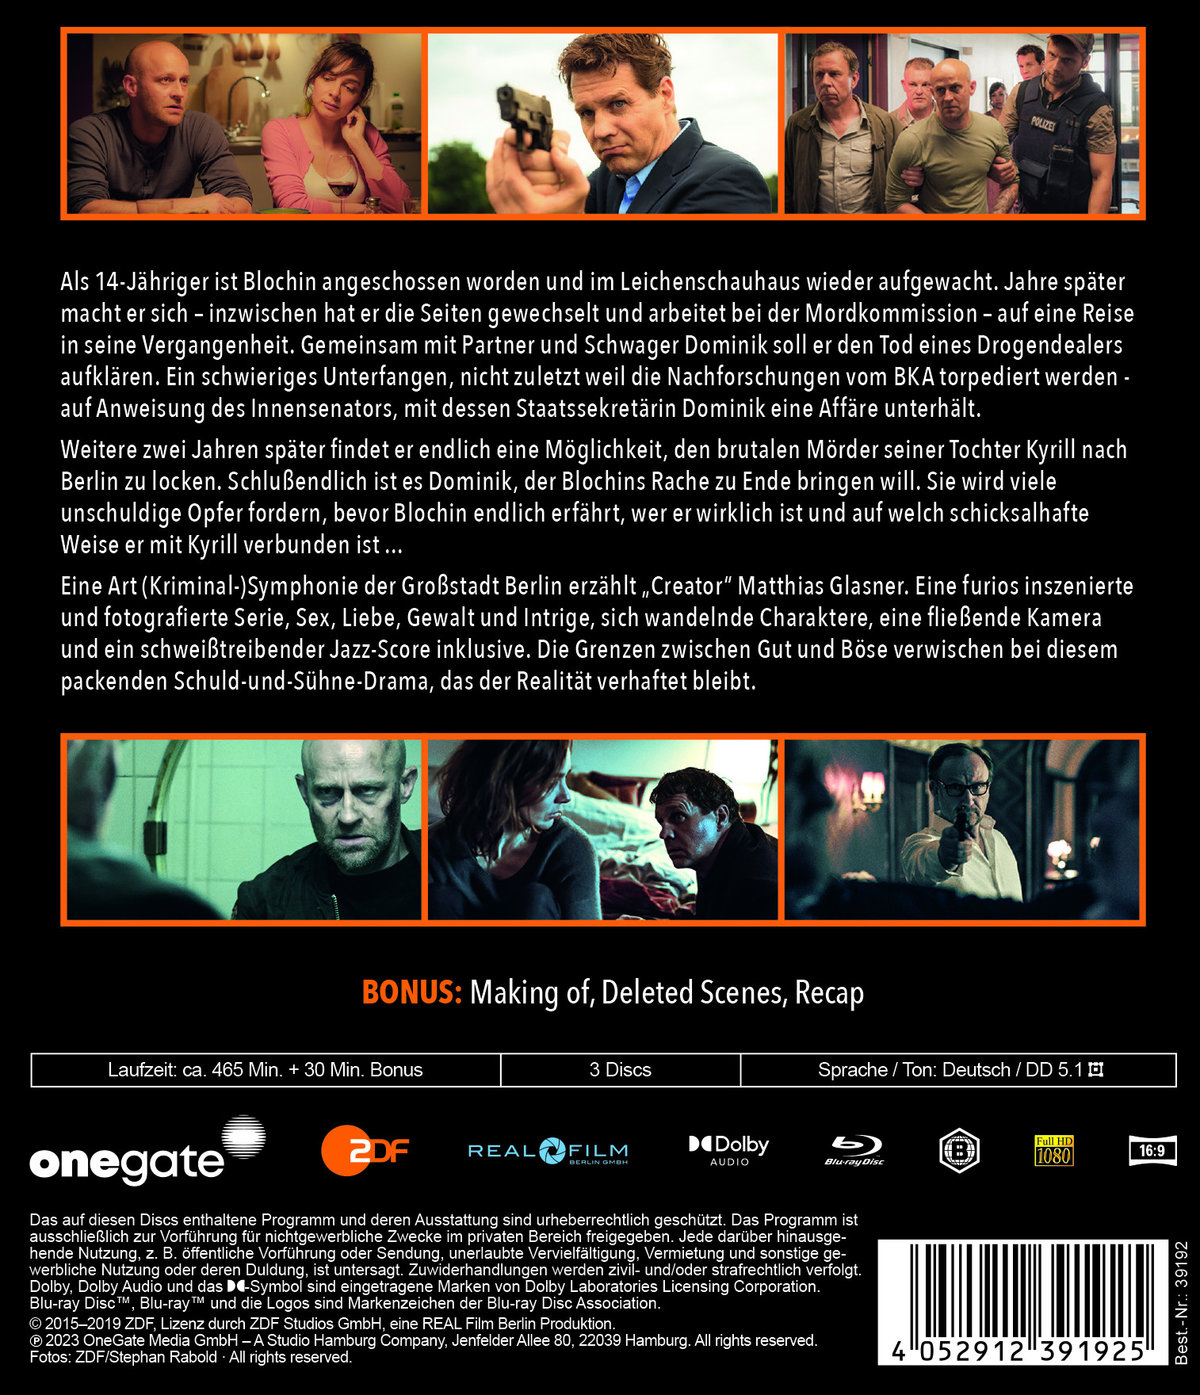 Blochin - Die komplette Serie  [3 BRs]  (Blu-ray Disc)